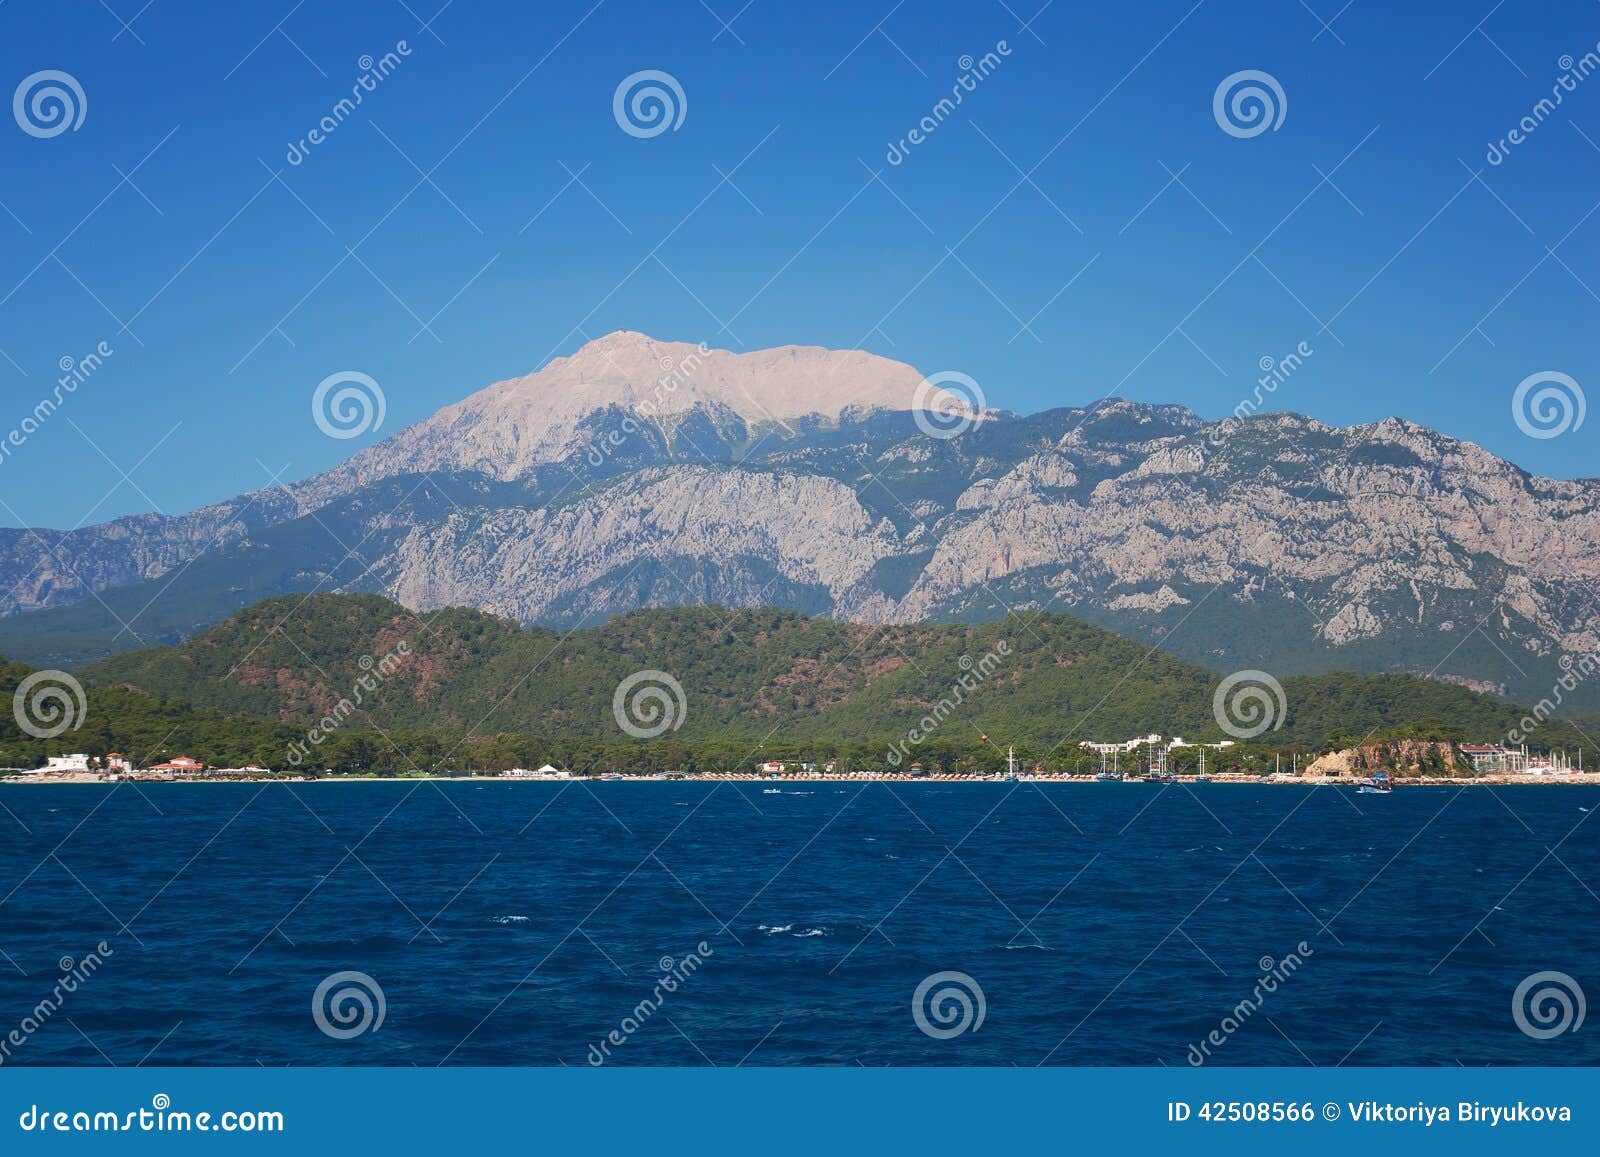 Côte méditerranéenne, Kemer, province d'Antalya, Turquie